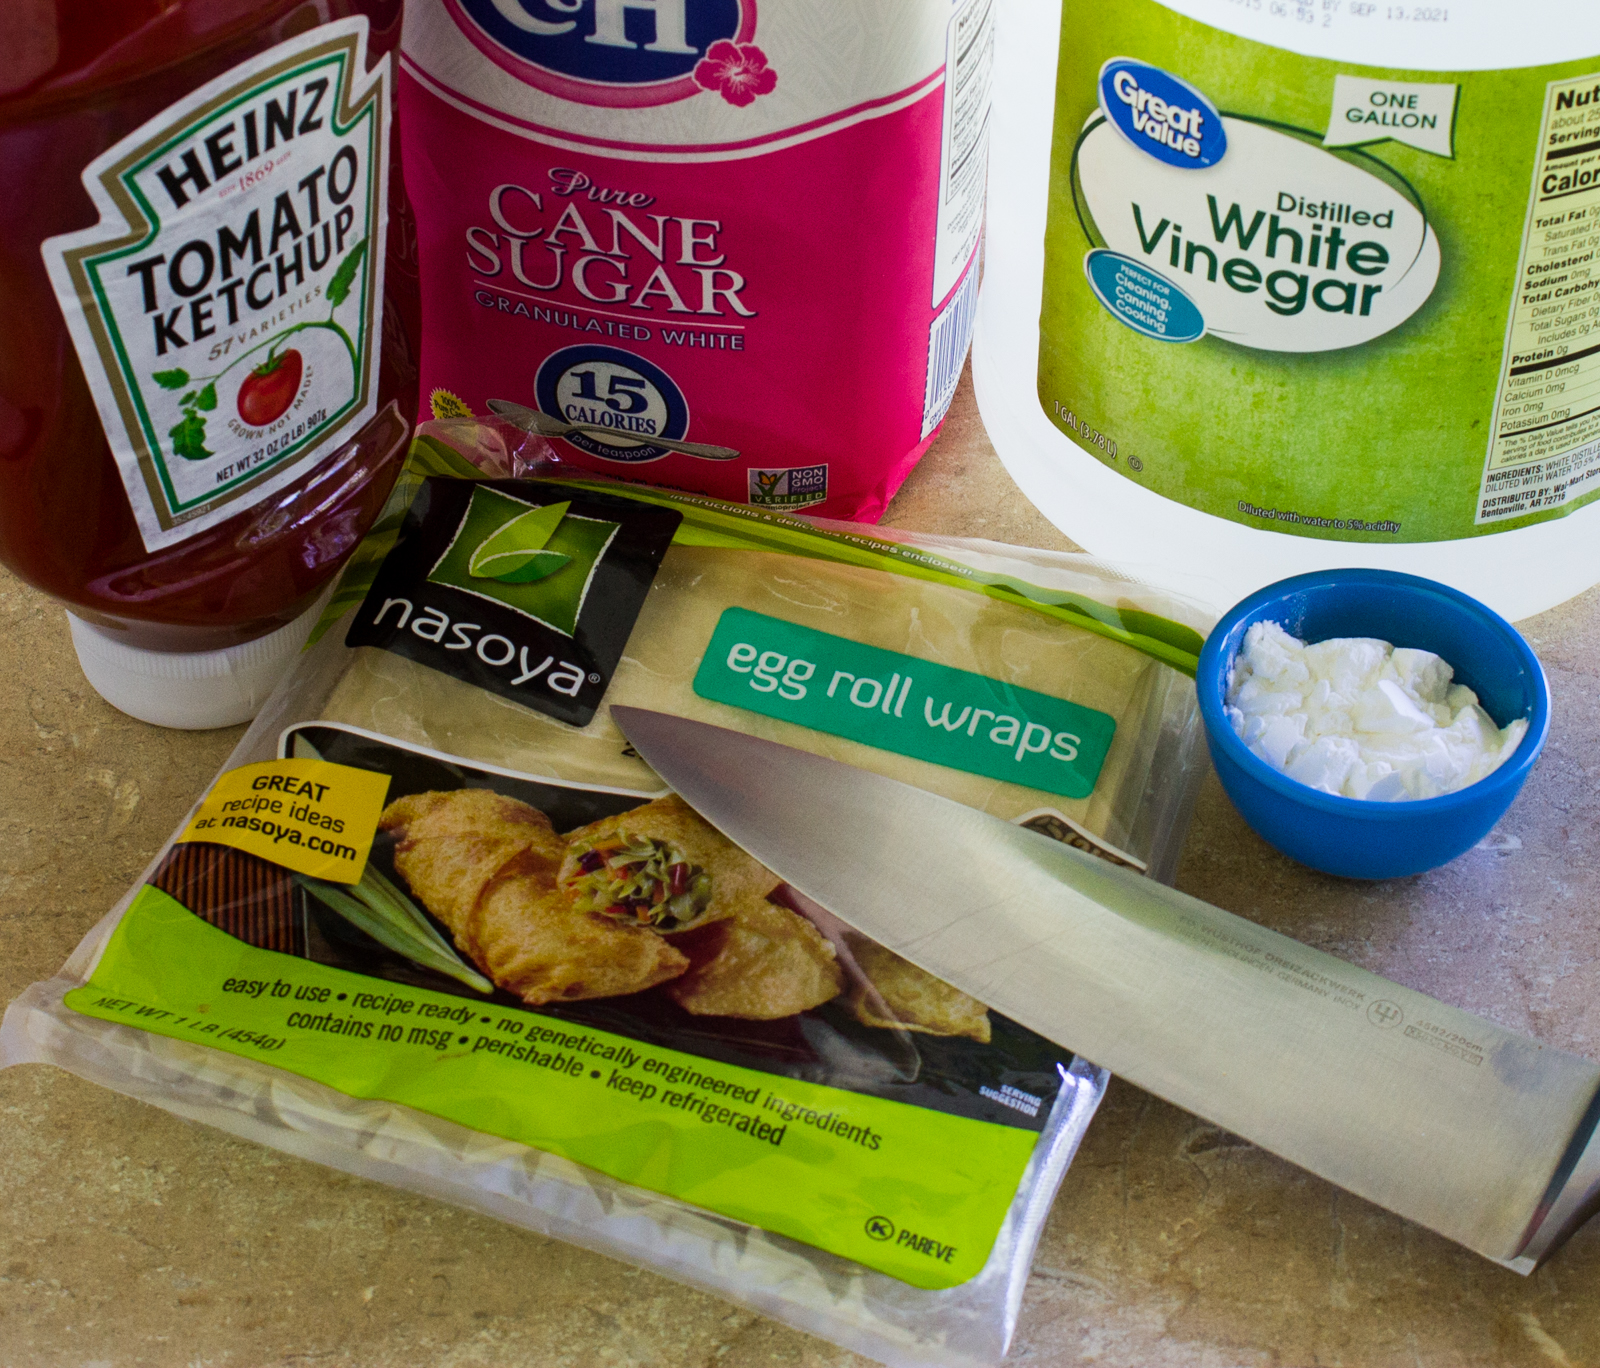 Ingredients egg roll wraps ketchup sugar white vinegar and cornstarch